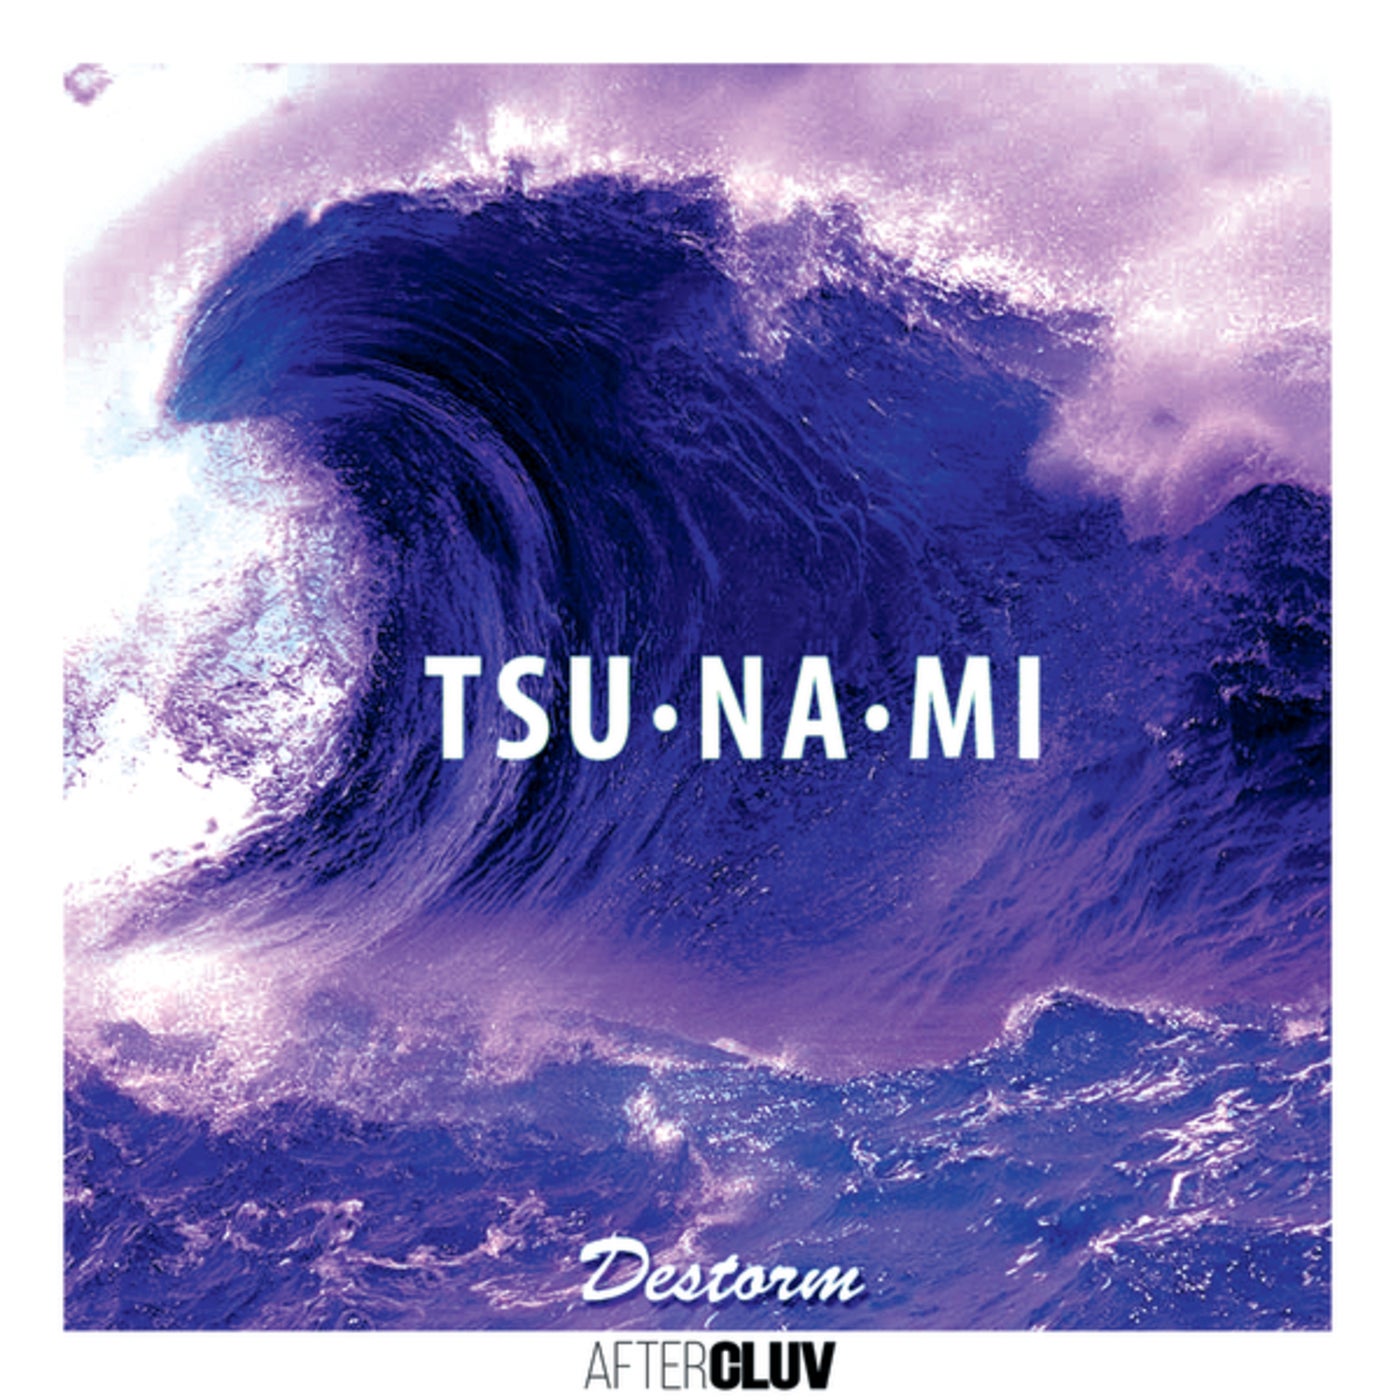 Tsunami (Original Mix) by on Beatport